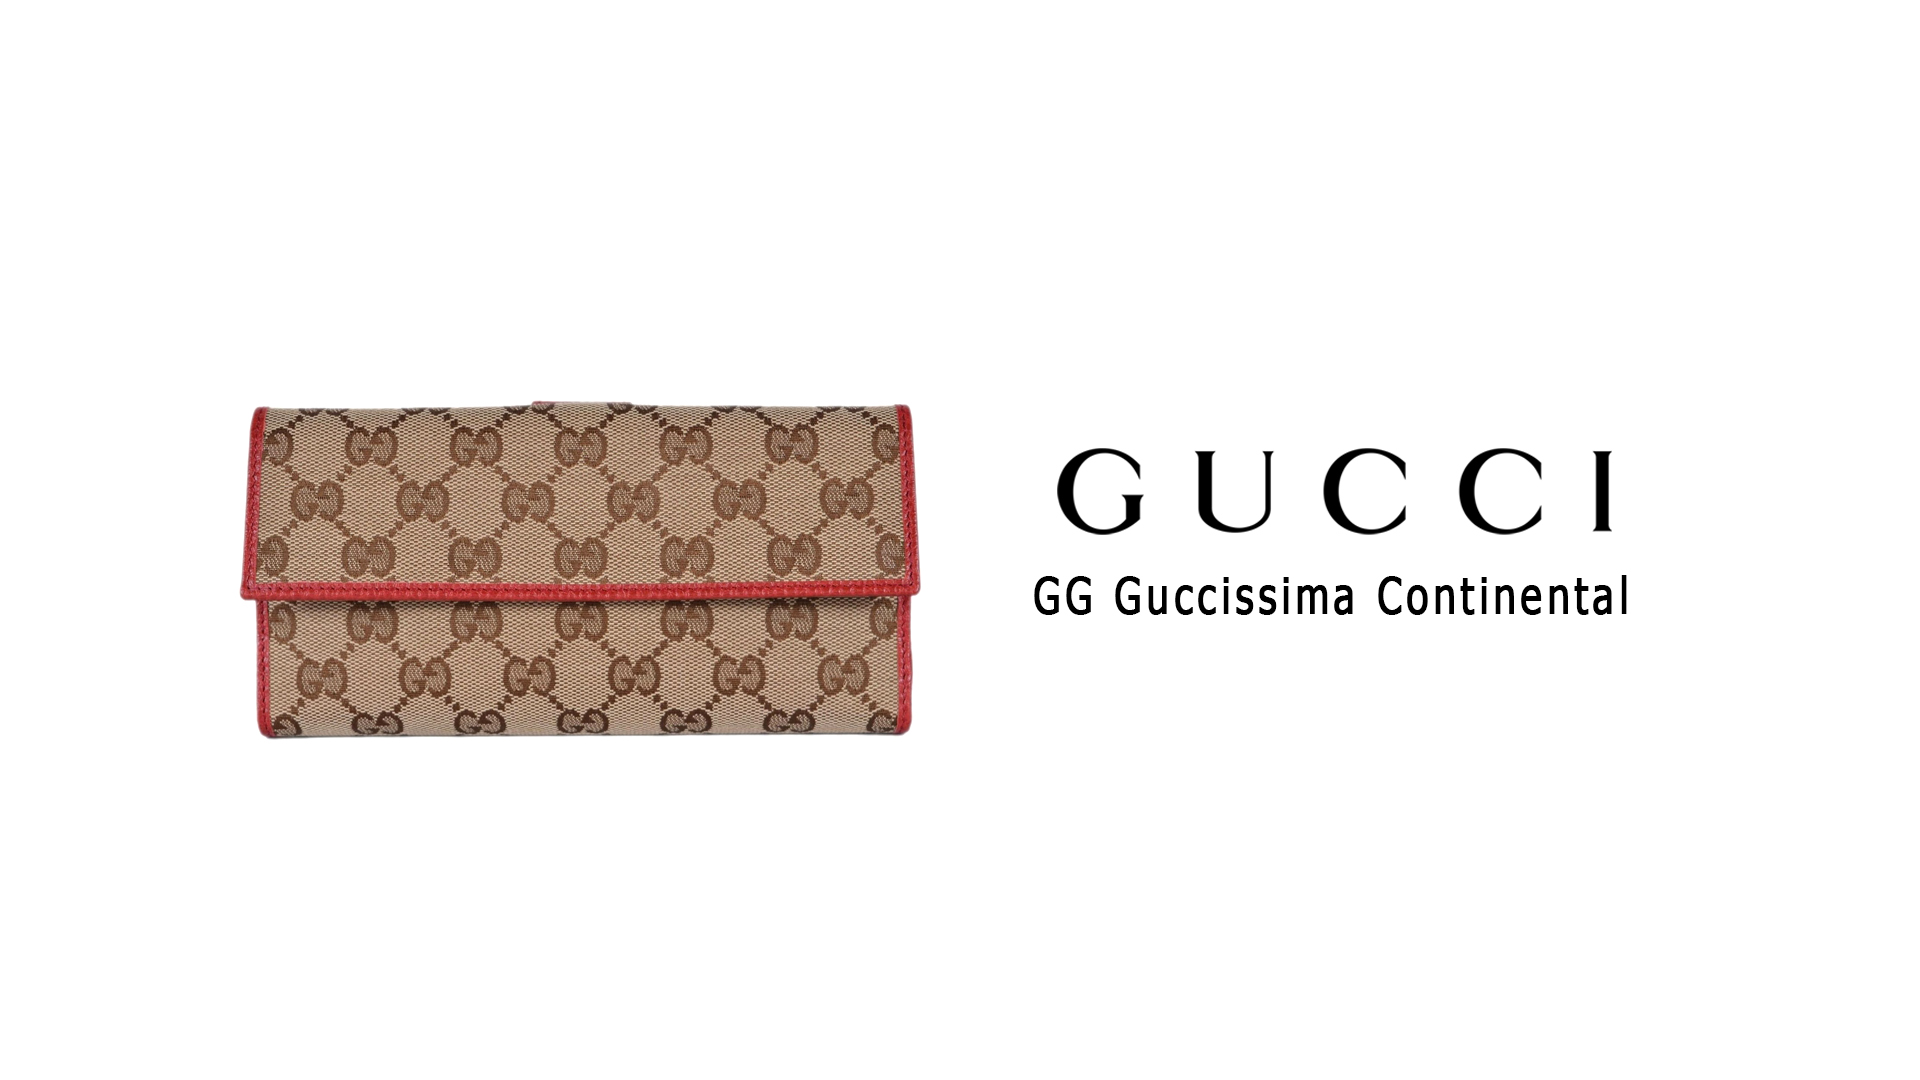 Gucci2.jpg